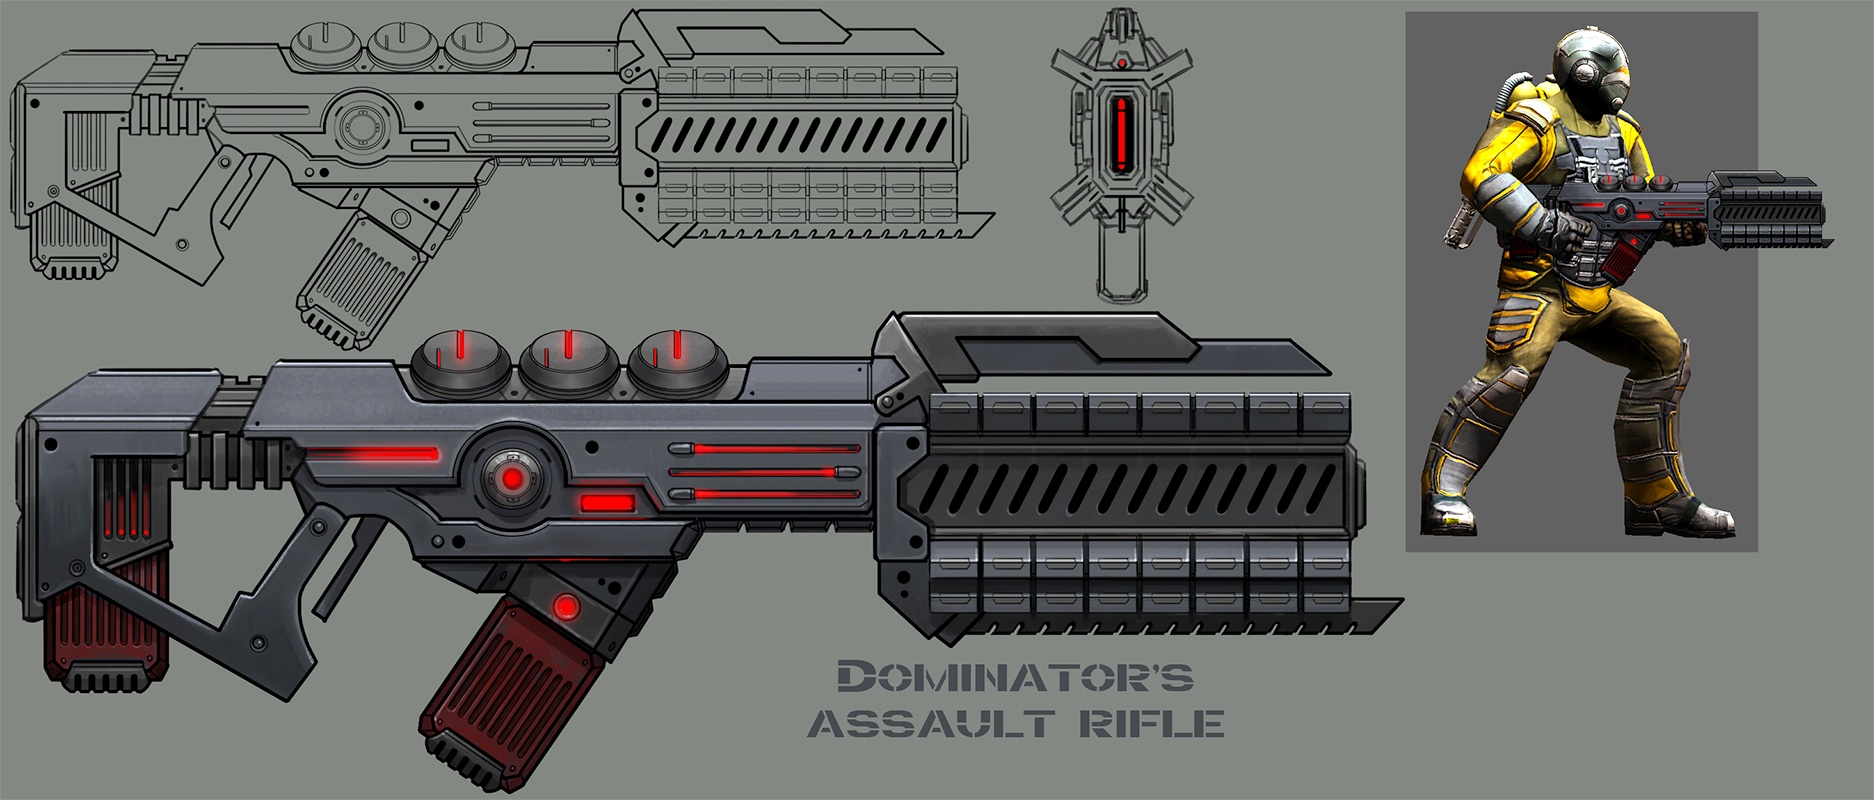 Dominion Assault Rifle Concept Art (First Version)